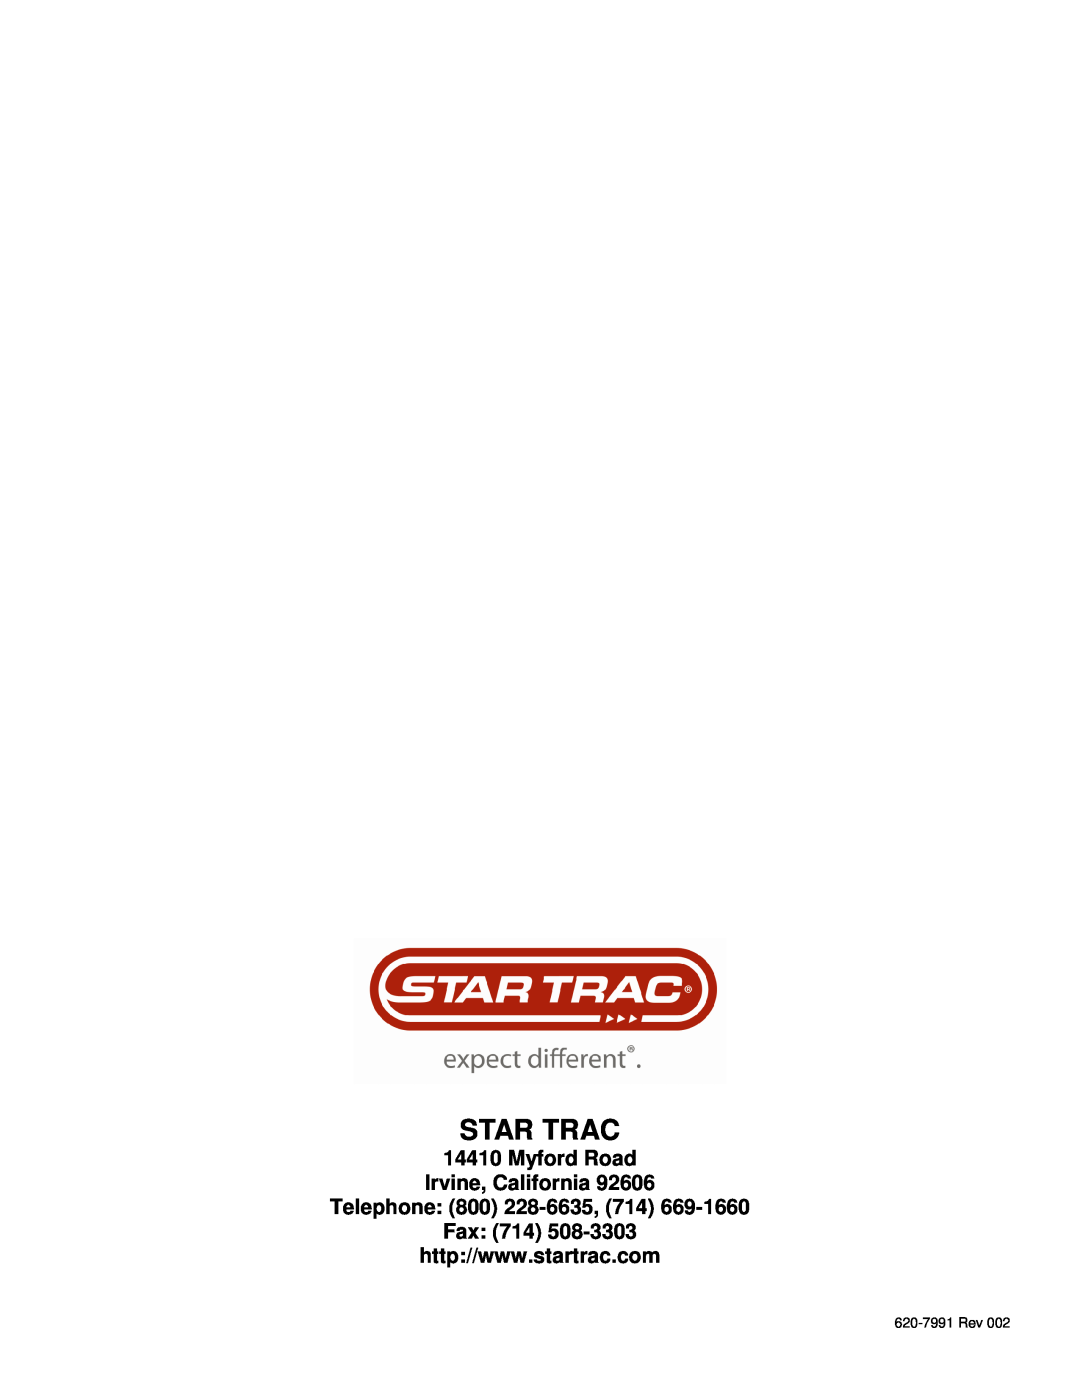 Star Trac E-RBi, E-STi, E-TBTi, E-UBi, E-TRi Star Trac, Myford Road Irvine, California Telephone 800 228-6635, 714, Fax 714 